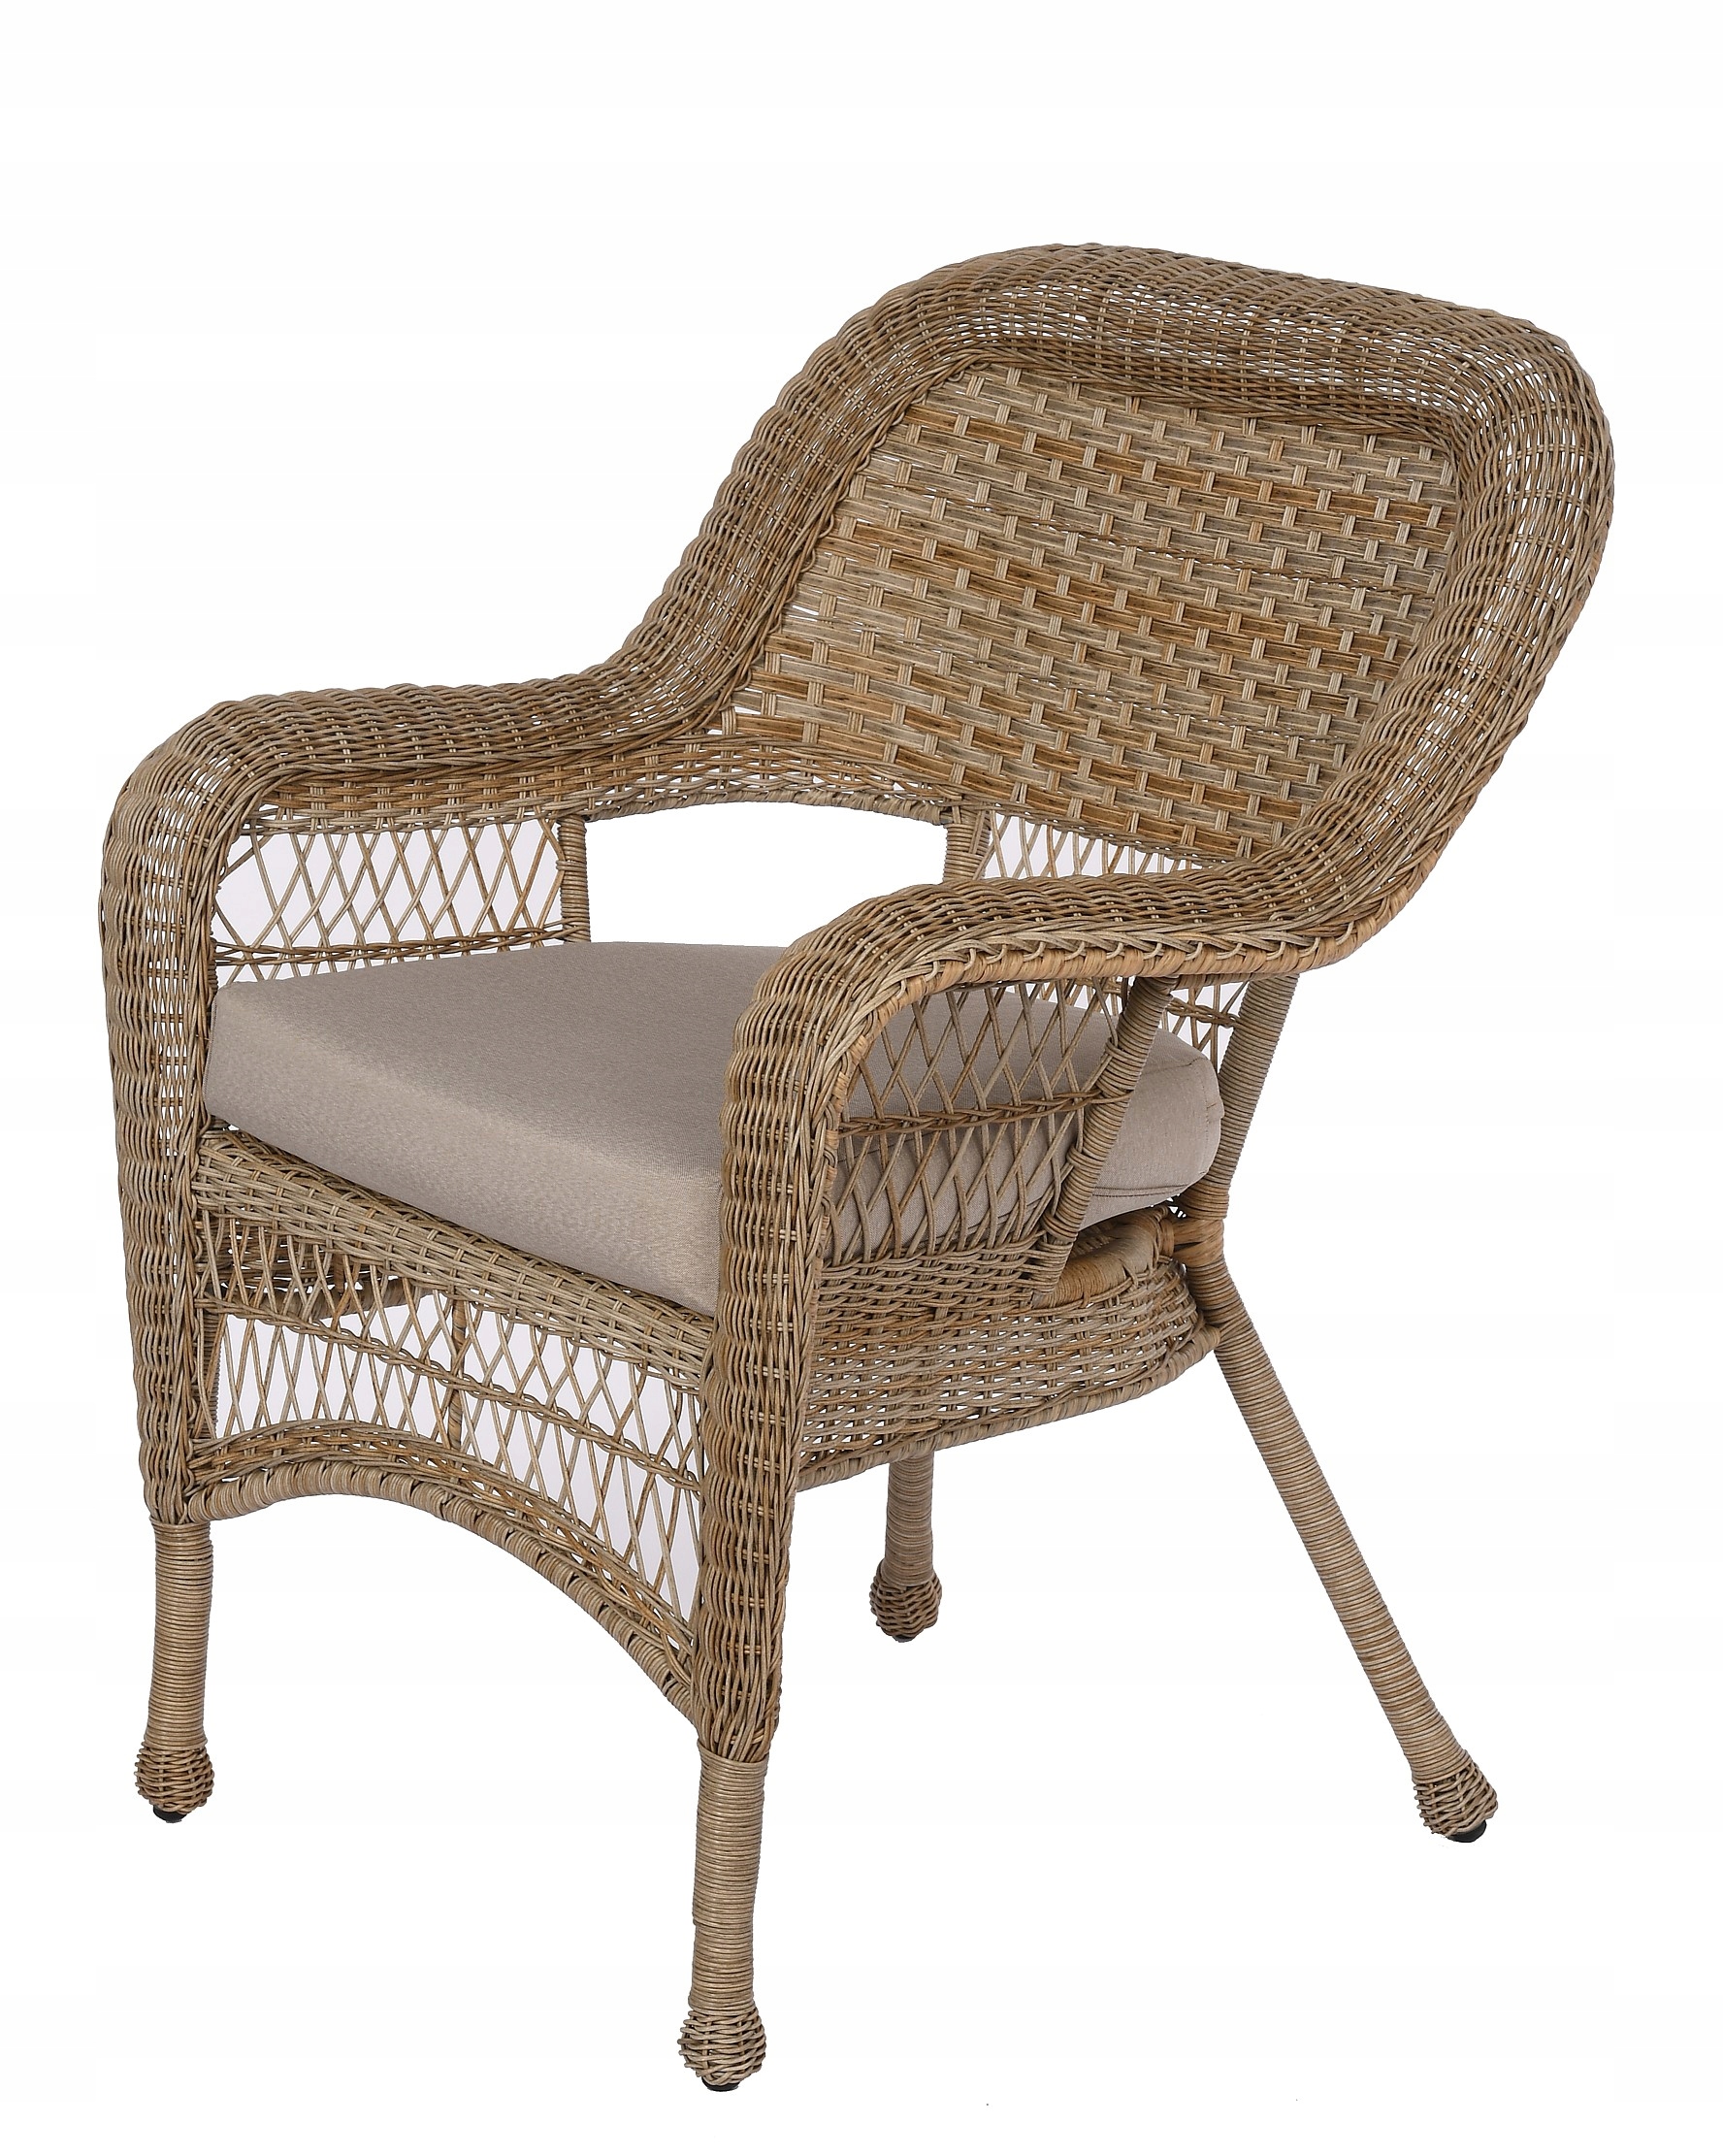 Крісло садове, велике, зручне, ротангове бохо Код виробника OTE-001-MANCHESTER2-КРІСЛО-БОХО